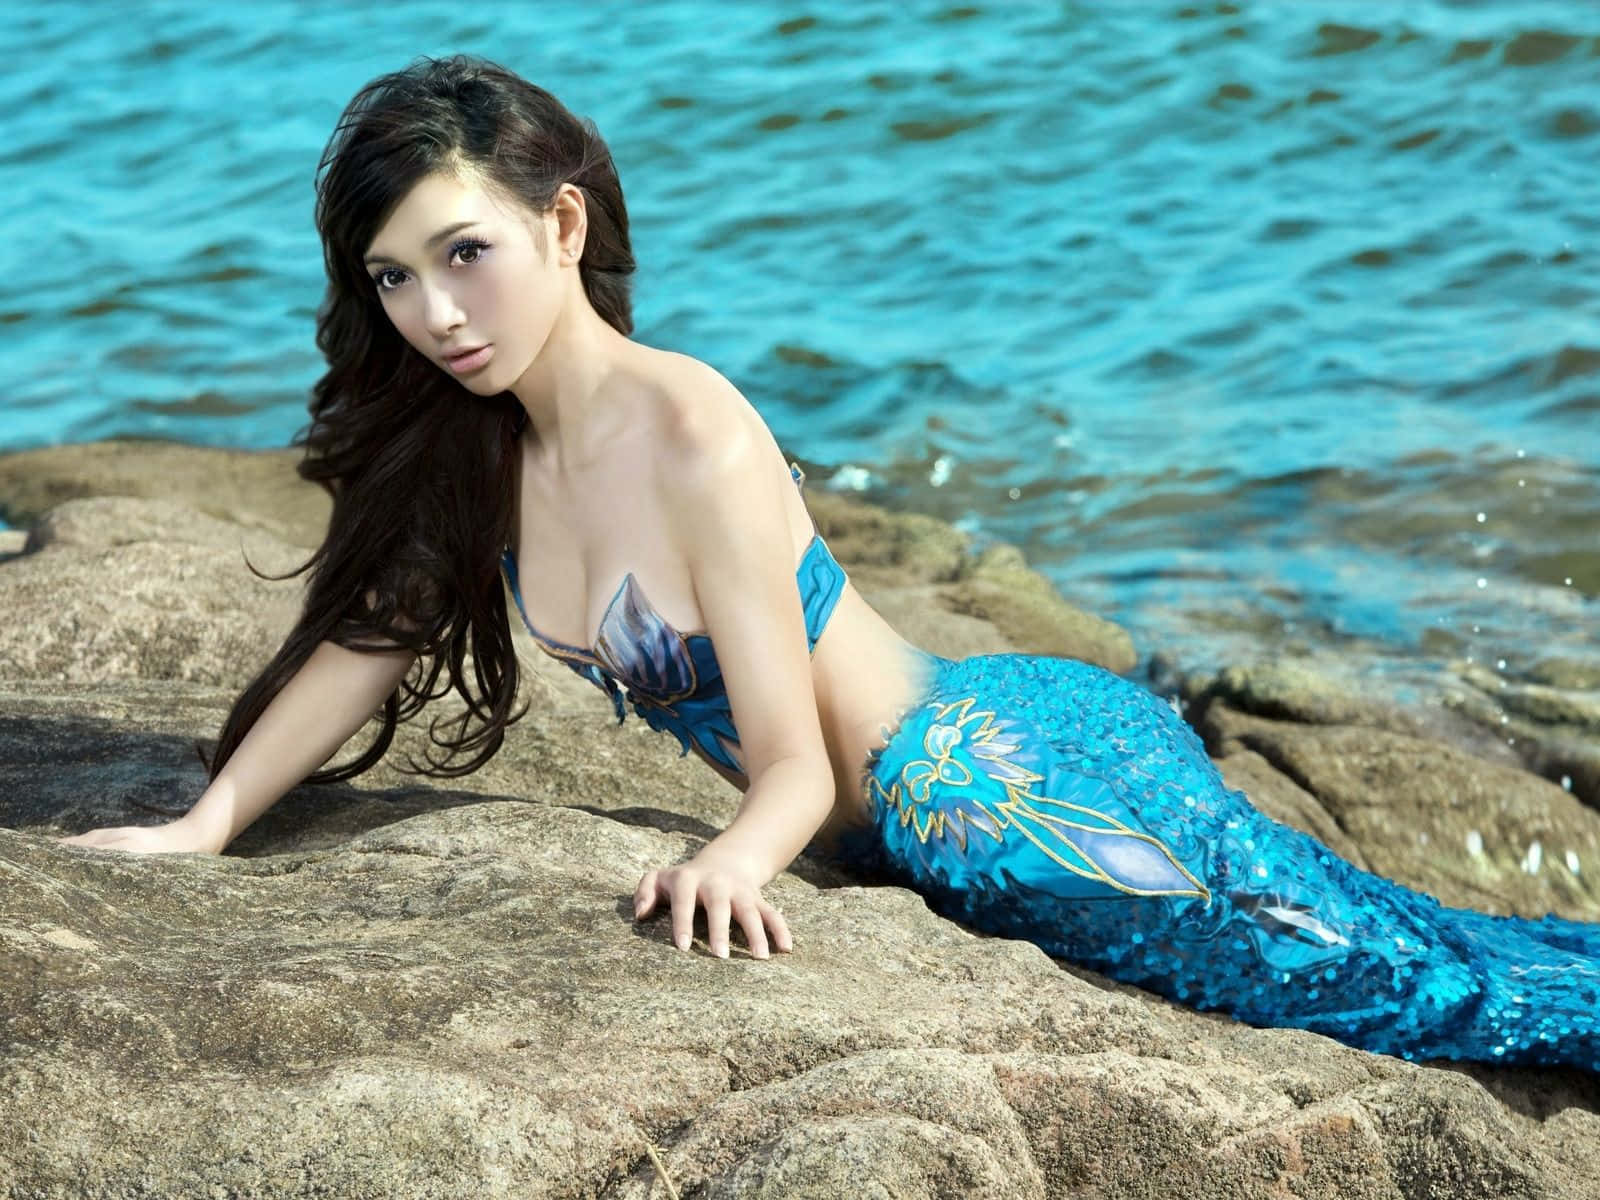 An Enchanting Real Mermaid Wallpaper